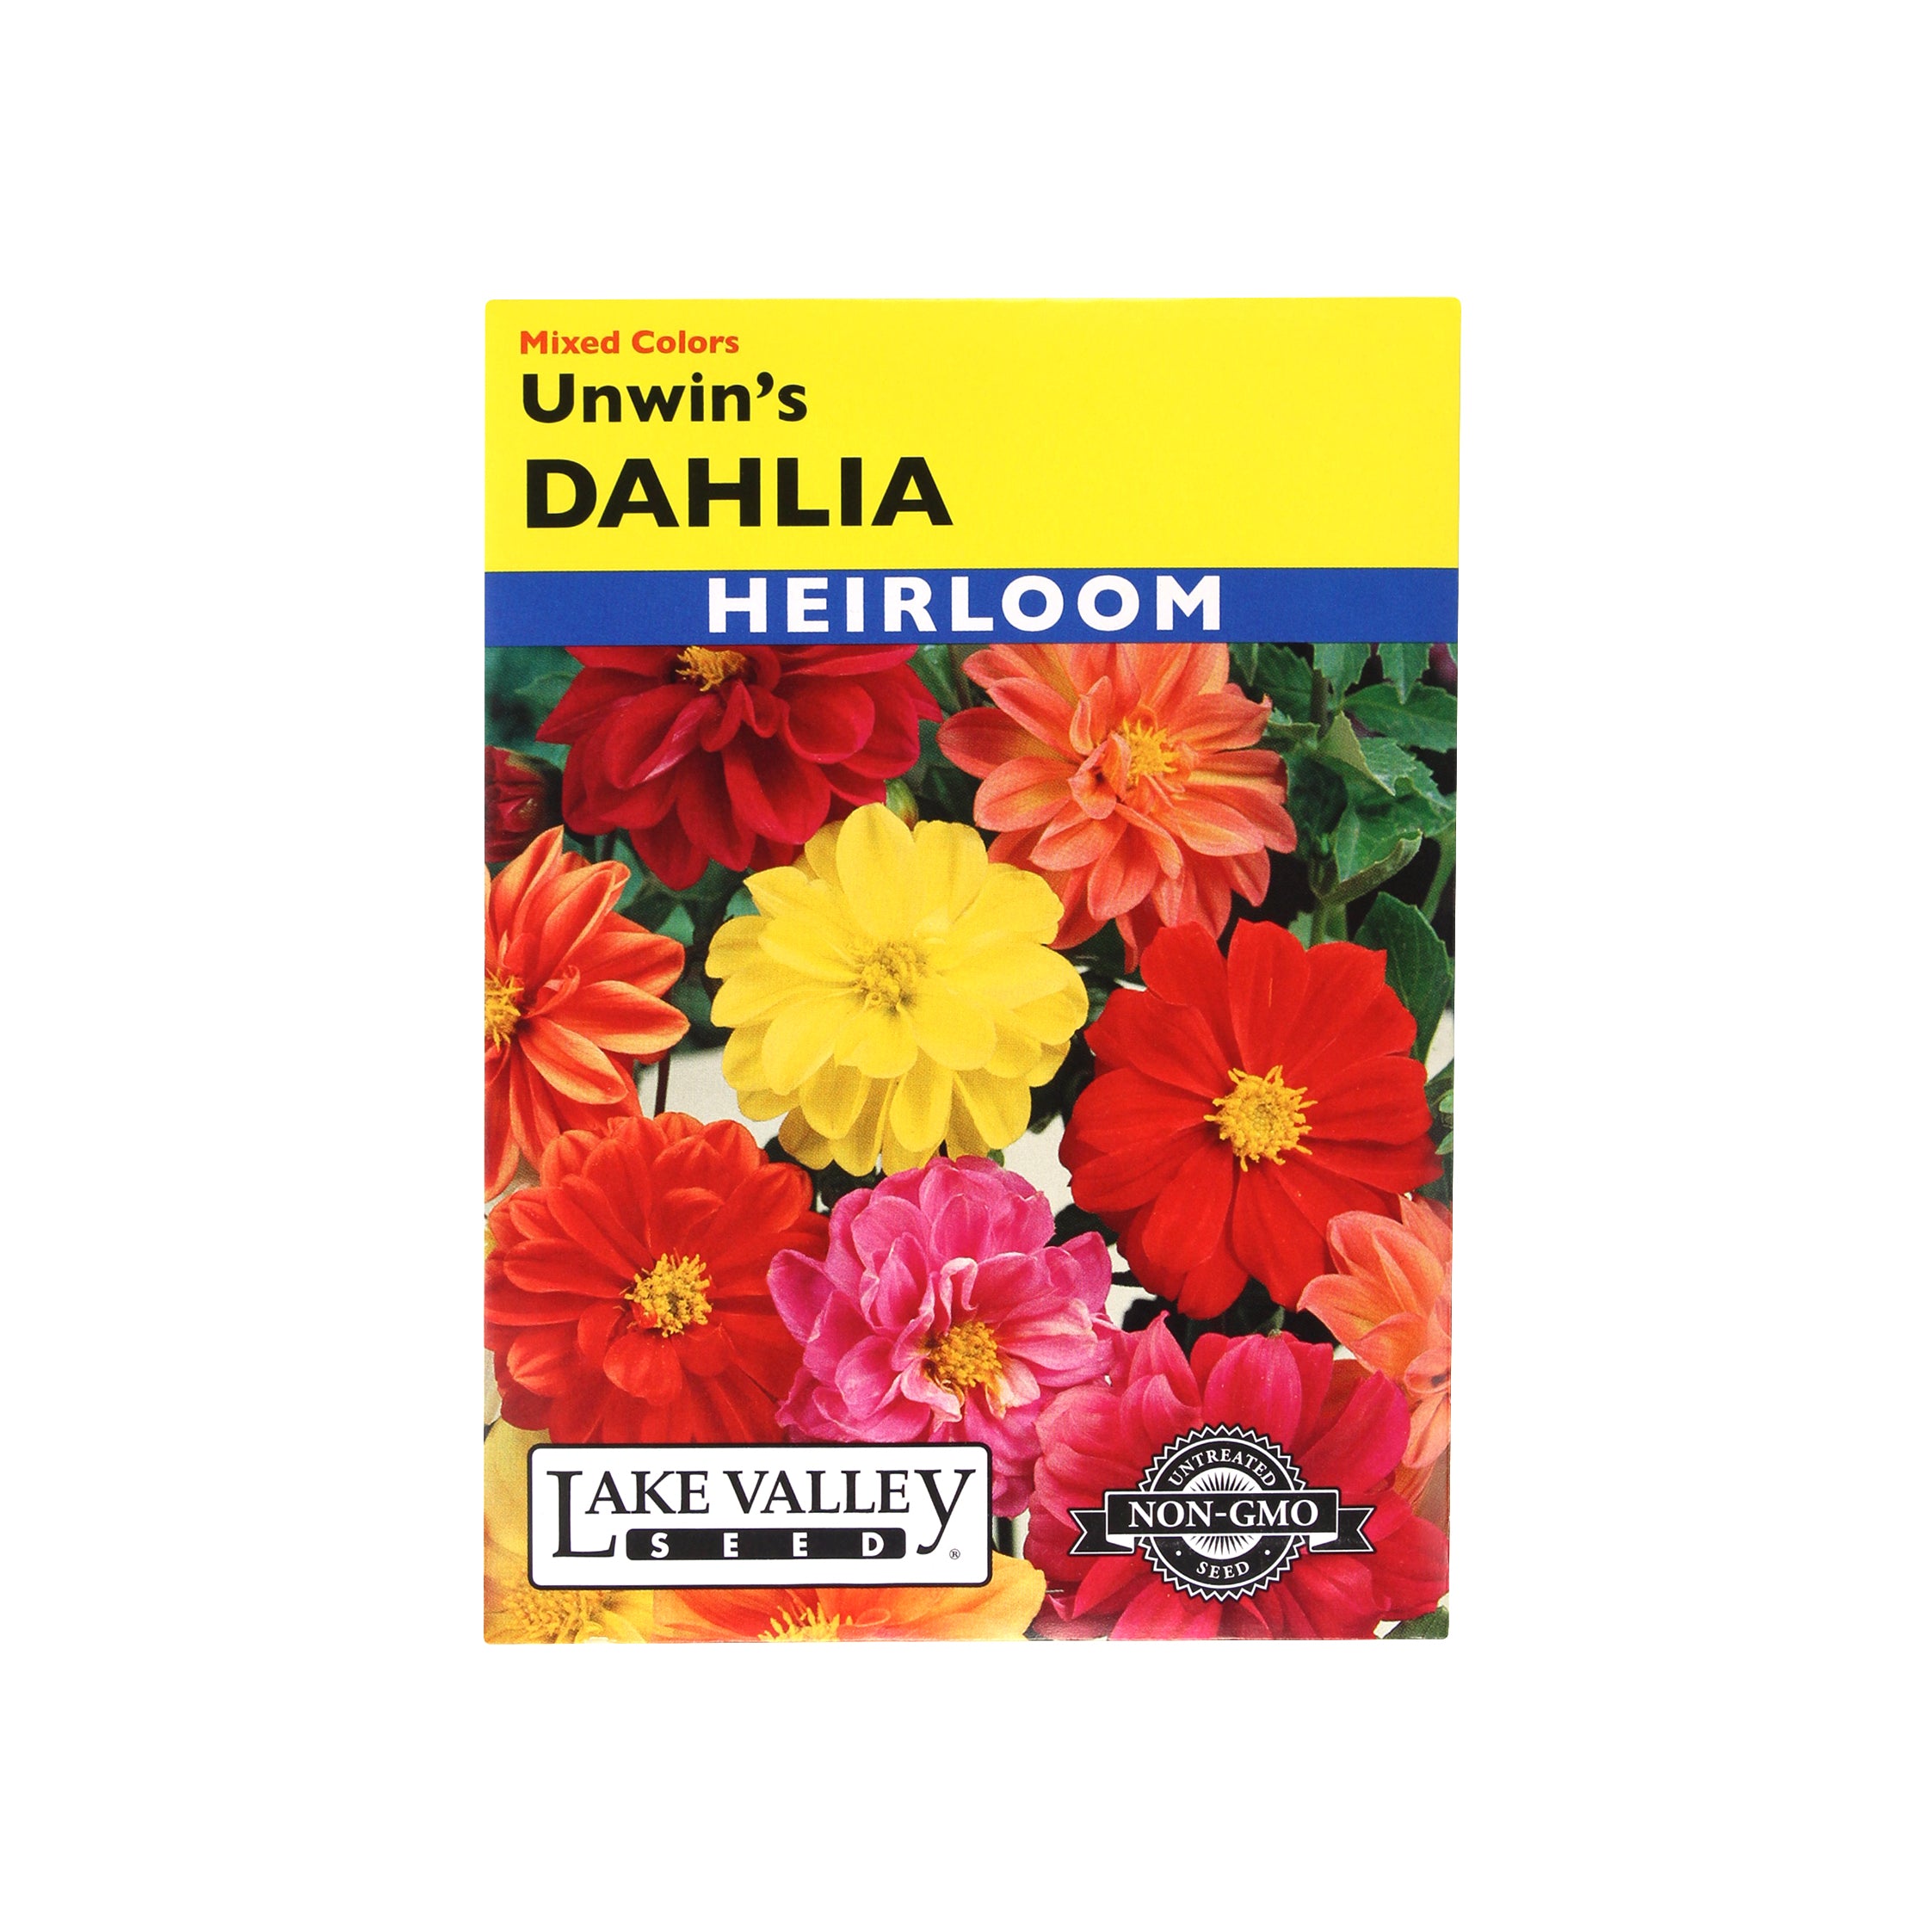 Lake Valley Seed Unwin's Dahlia Flower Mix Heirloom, 0.4g